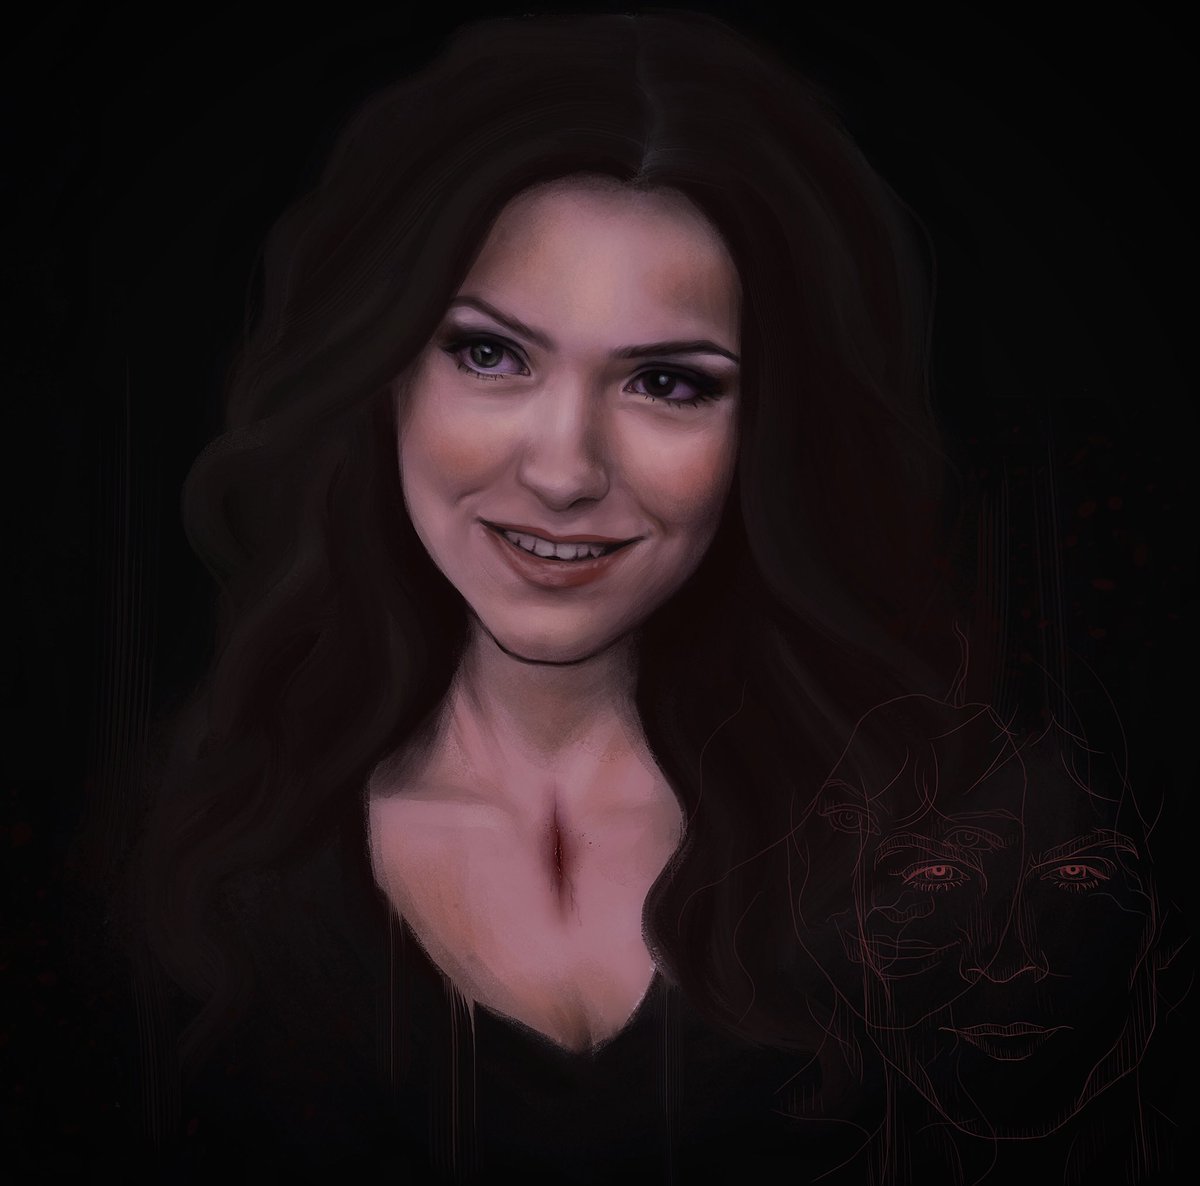 Portrait fan-art✍️ Nina Dobrev
#fanart #vampirediariesart #digitalportrait